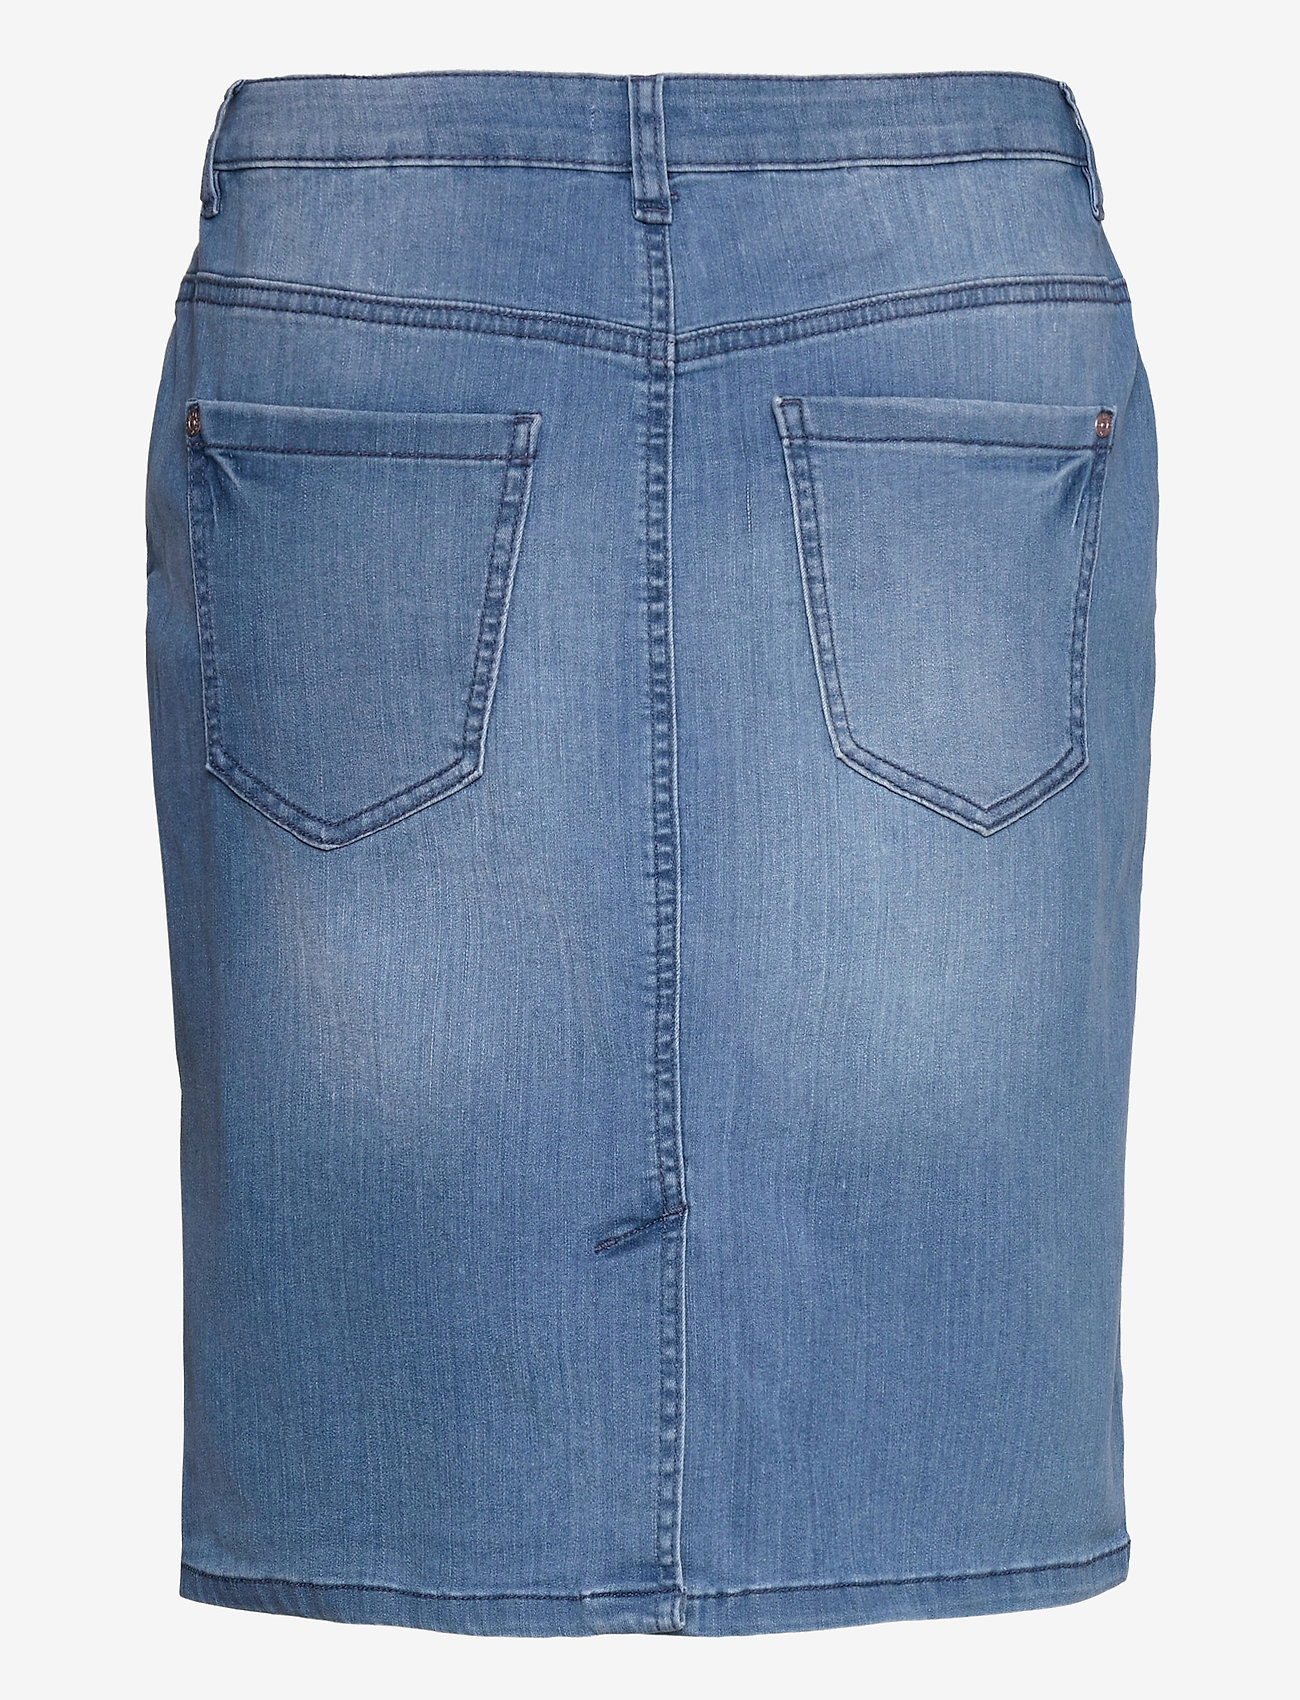 Tom Tailor - denim skirt - jeansowe spódnice - light stone wash denim - 1